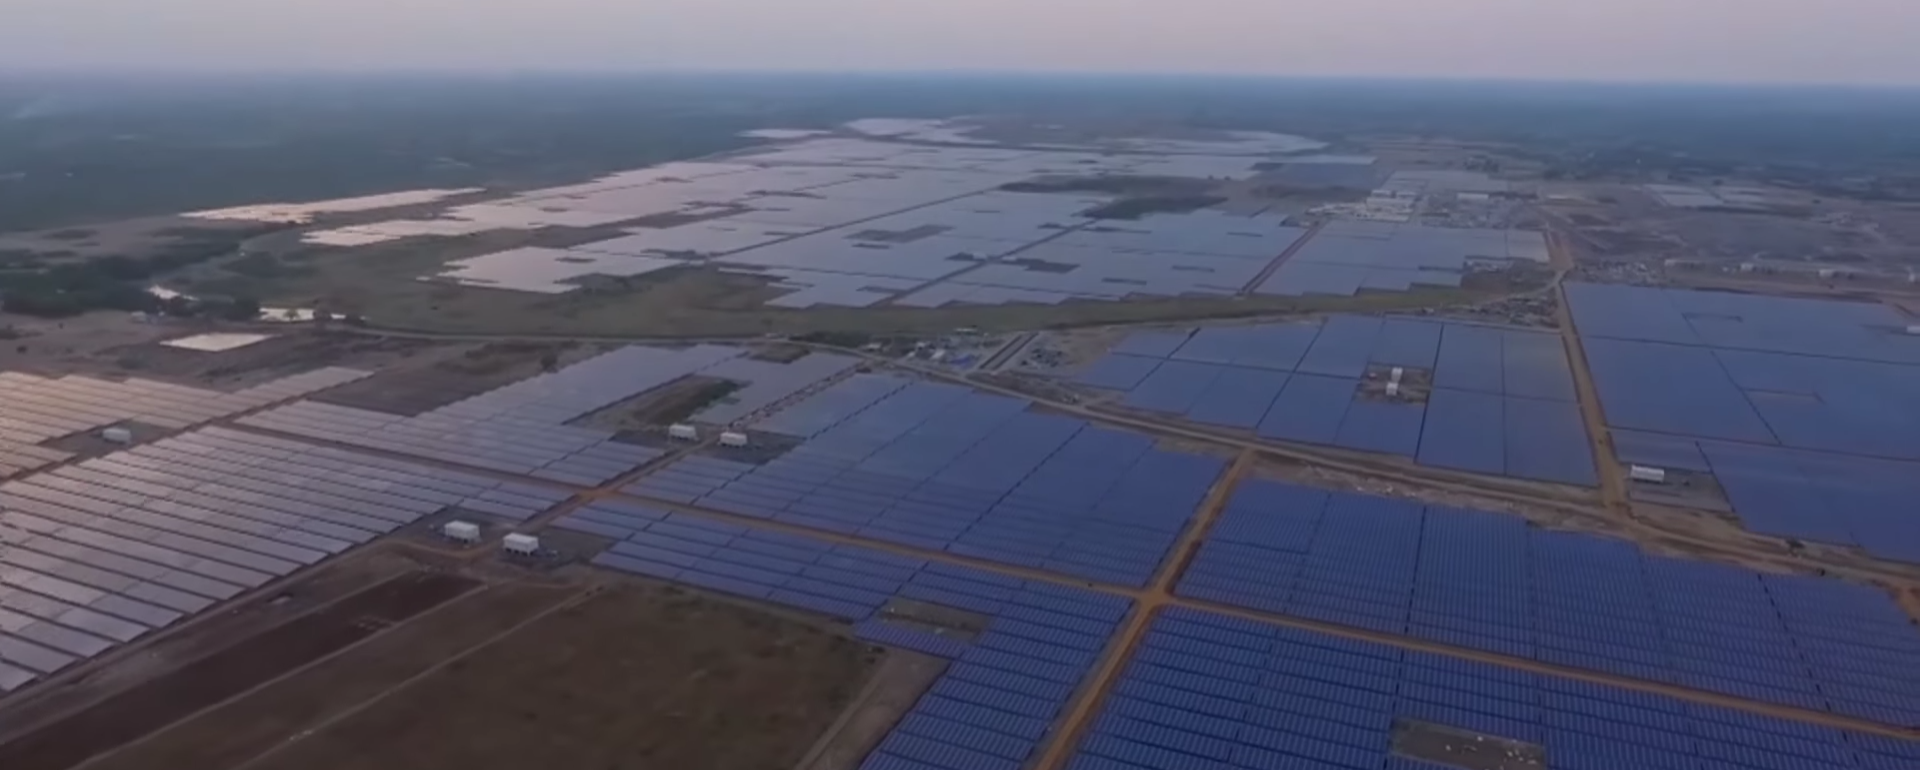 india-largest-solar-farm